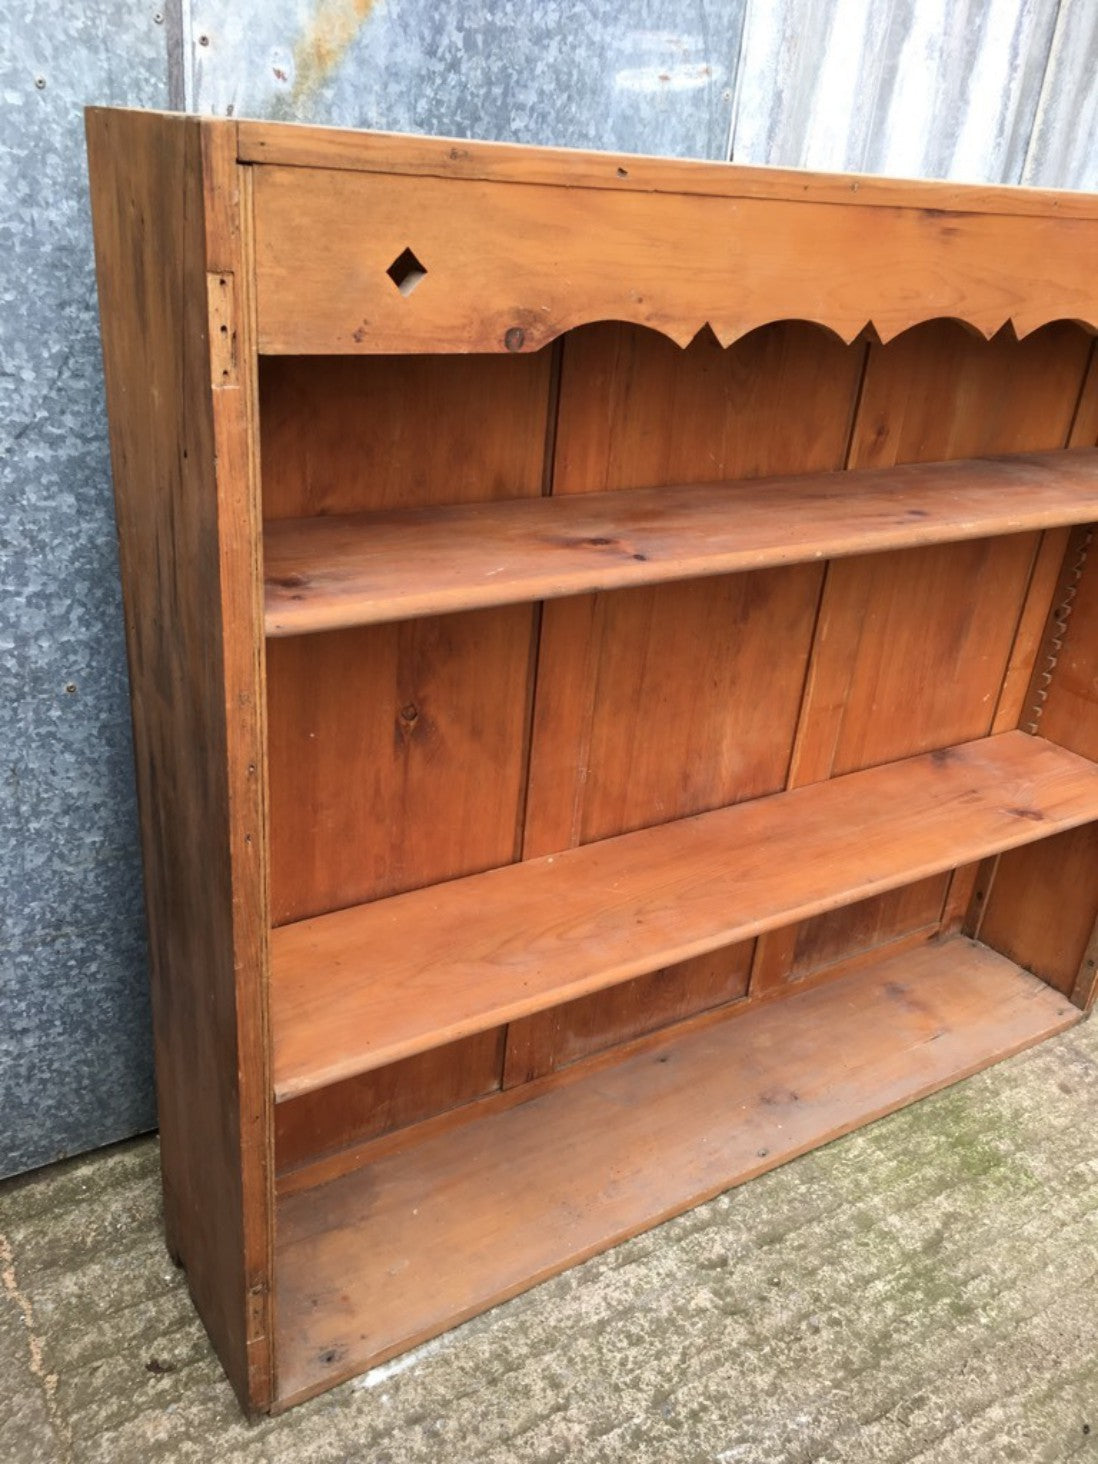 126.9x150.2cm Victorian Pine Ex-Dresser Top Bookcase Shelves Adjustable Shelf